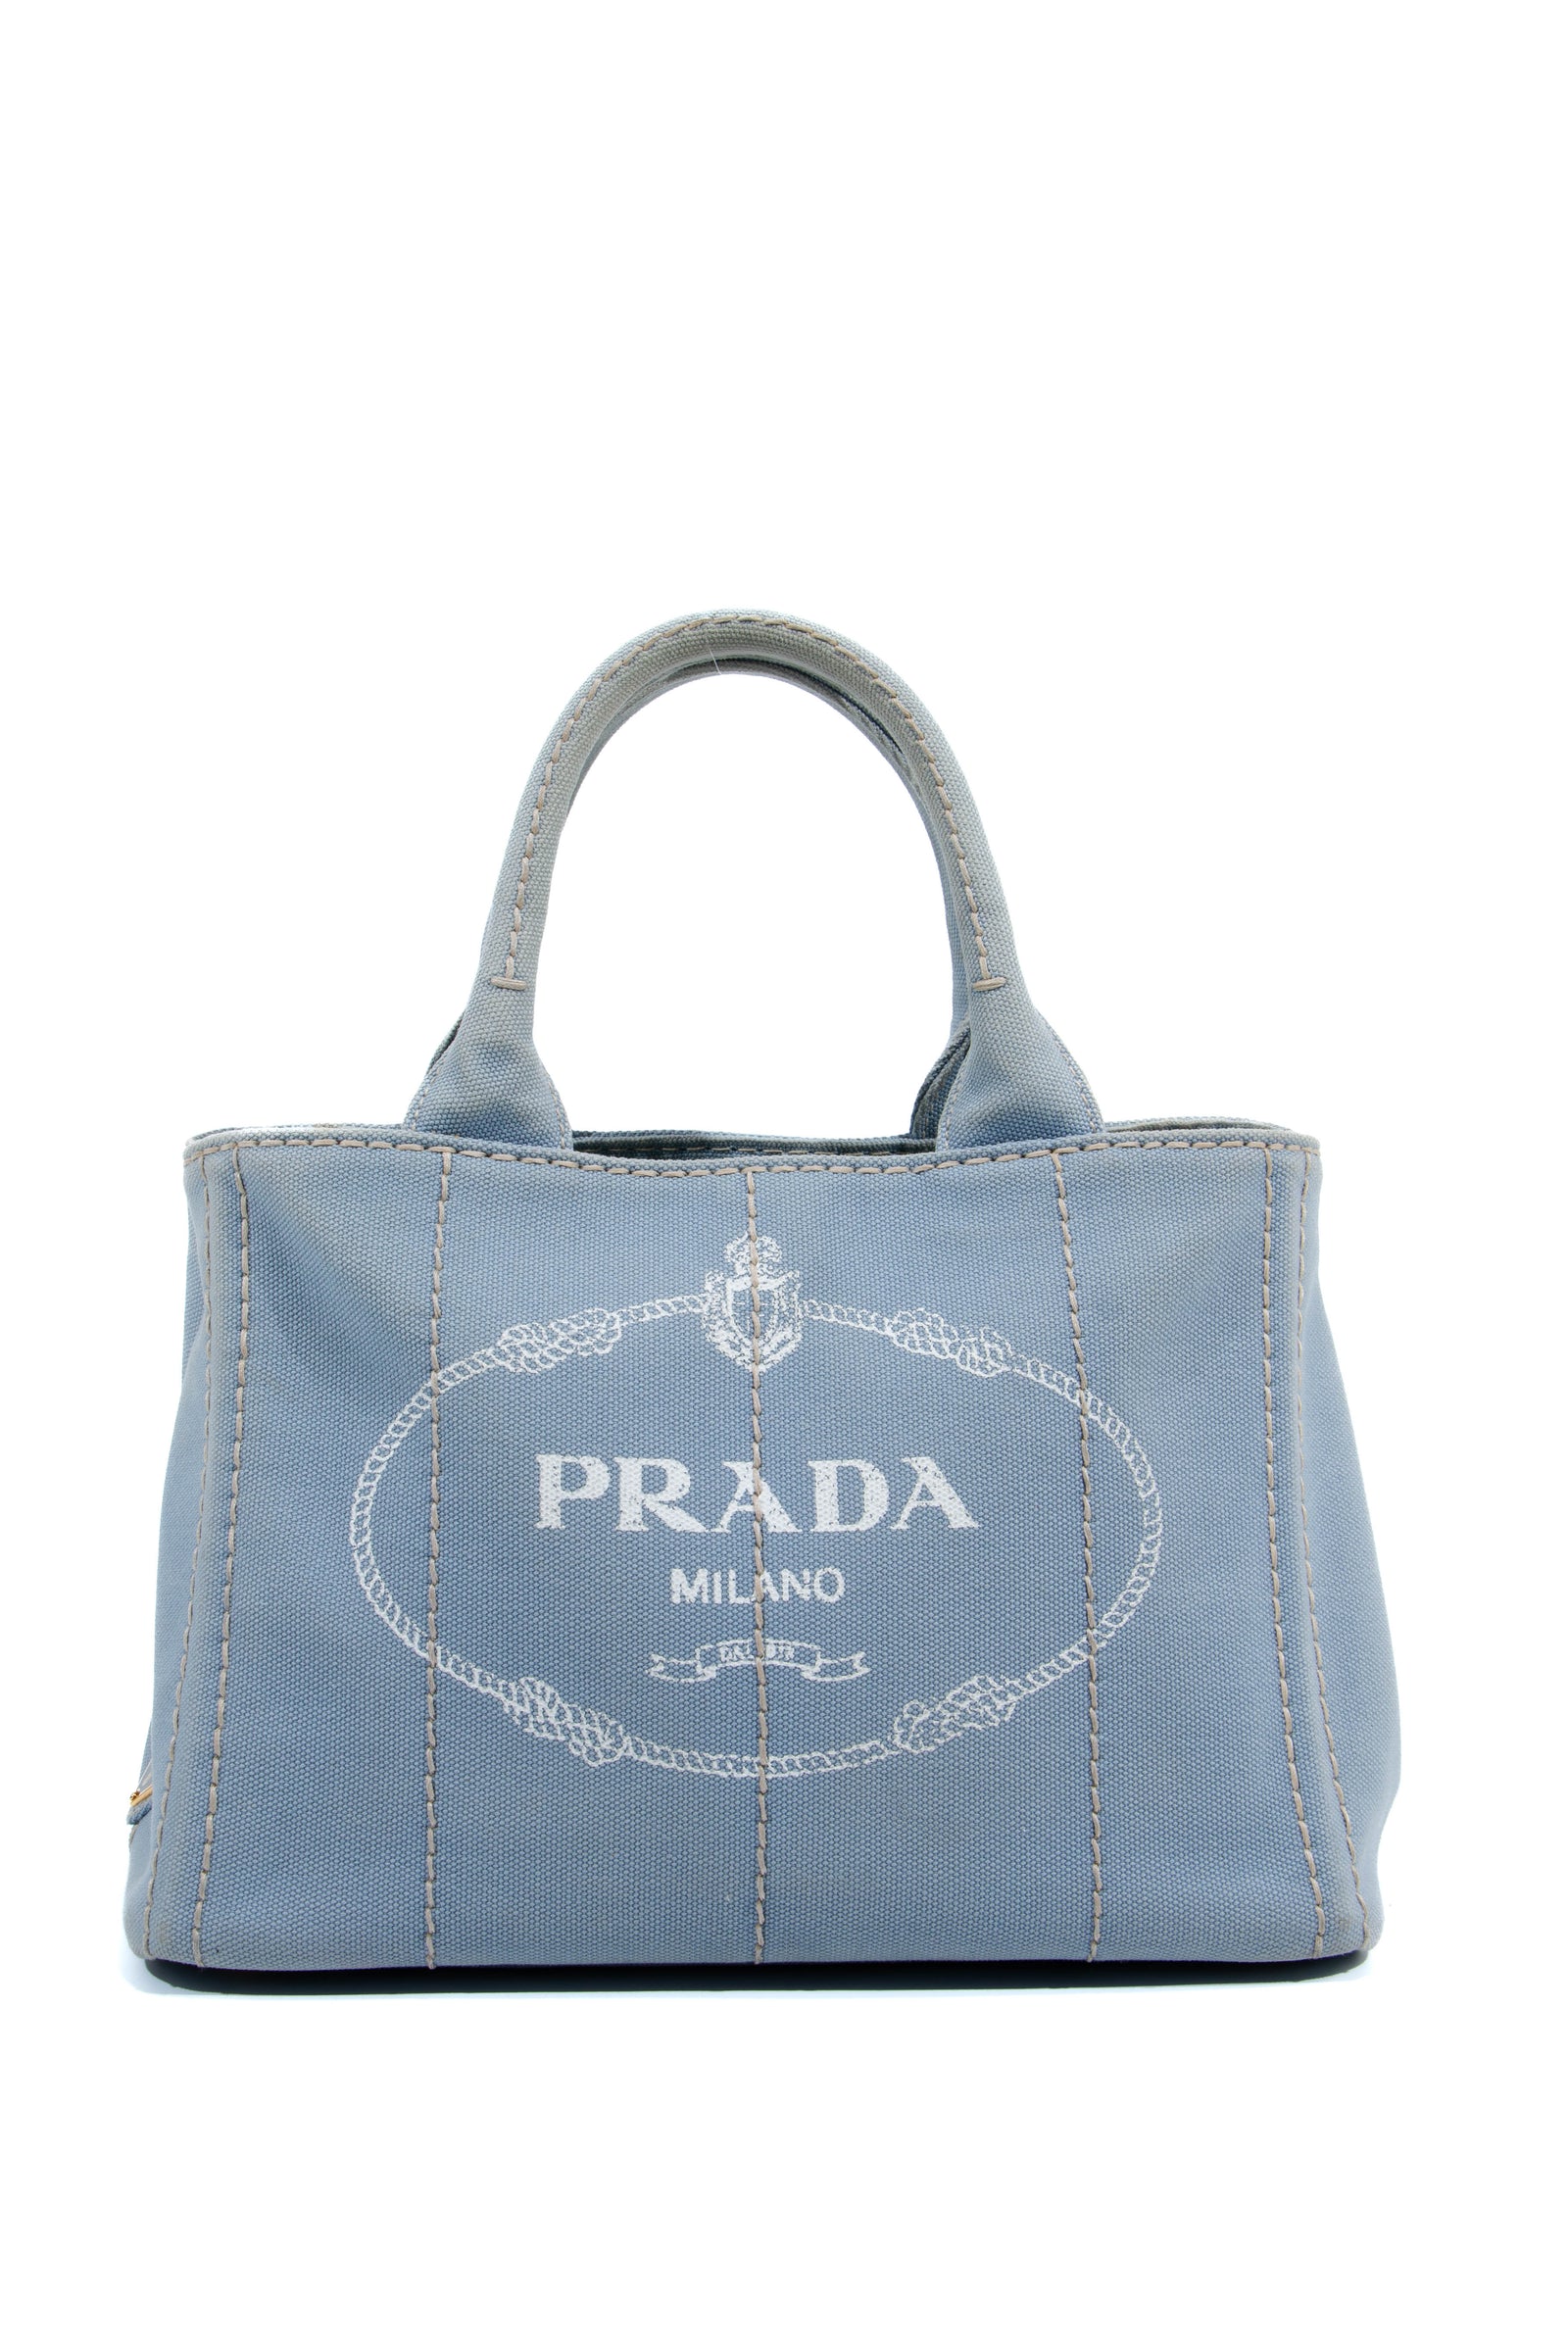 Prada Canapa – The Brand Collector